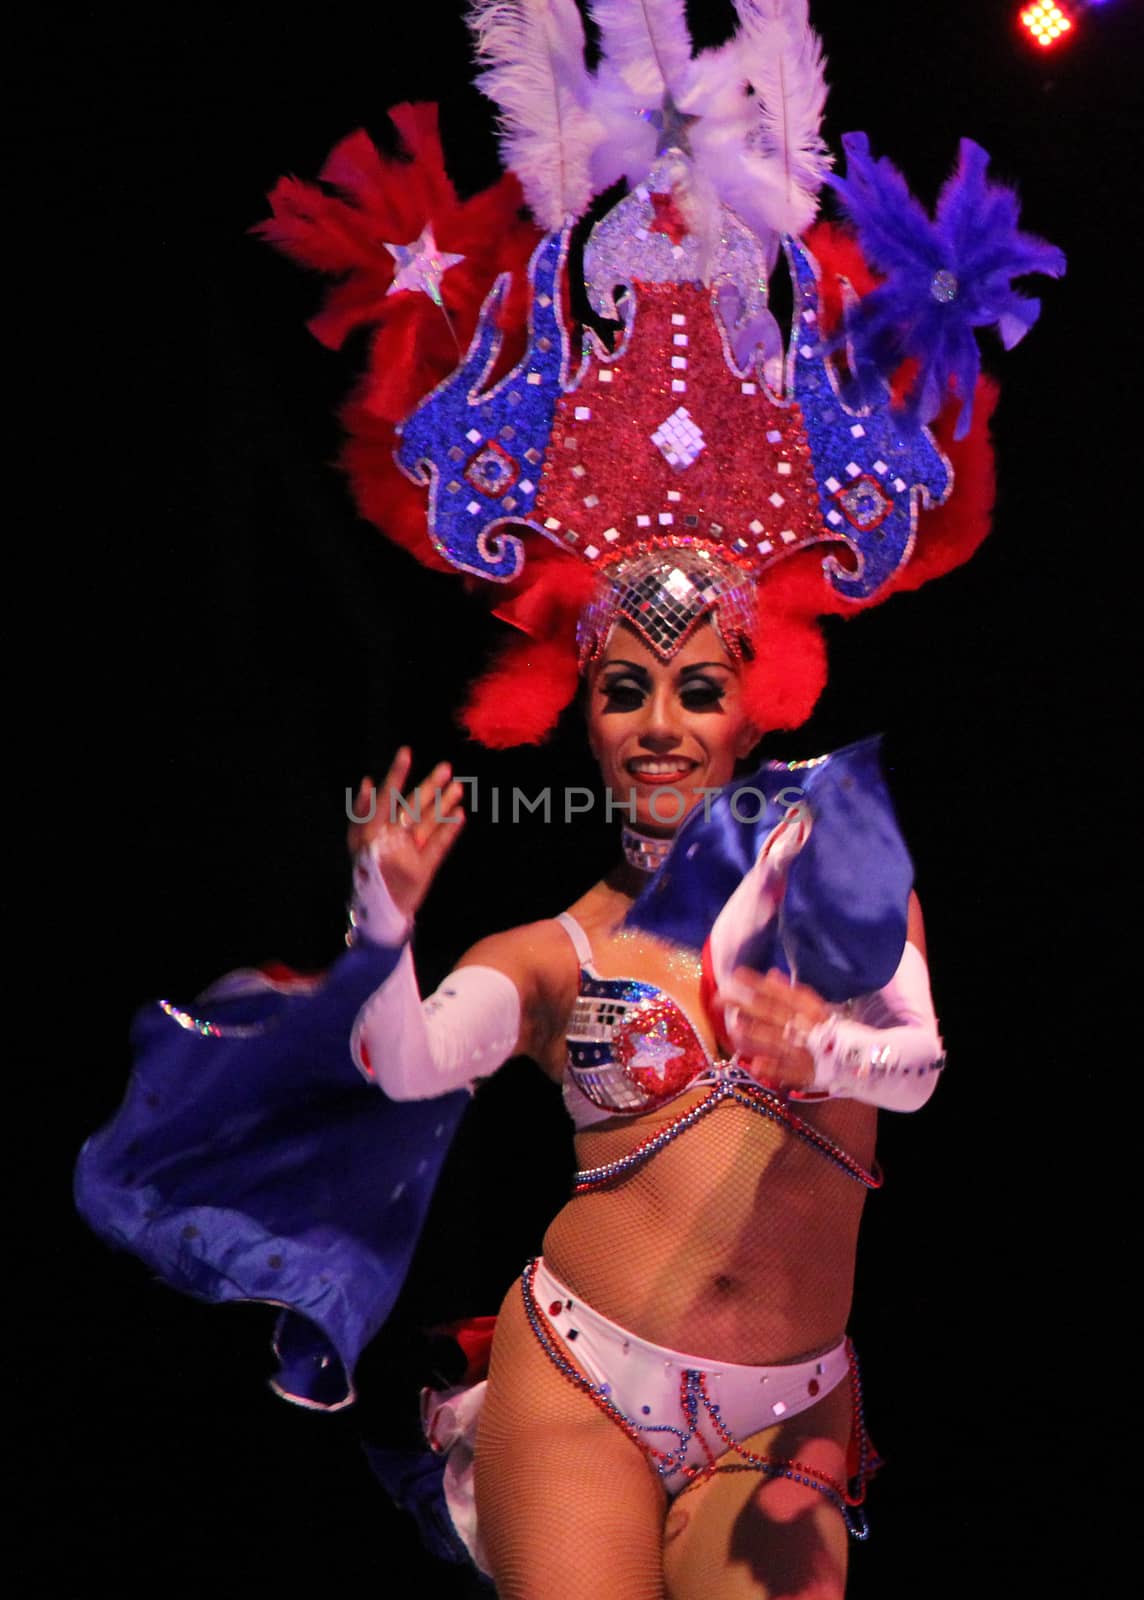 Mexican Carnaval 2013 by photocdn39